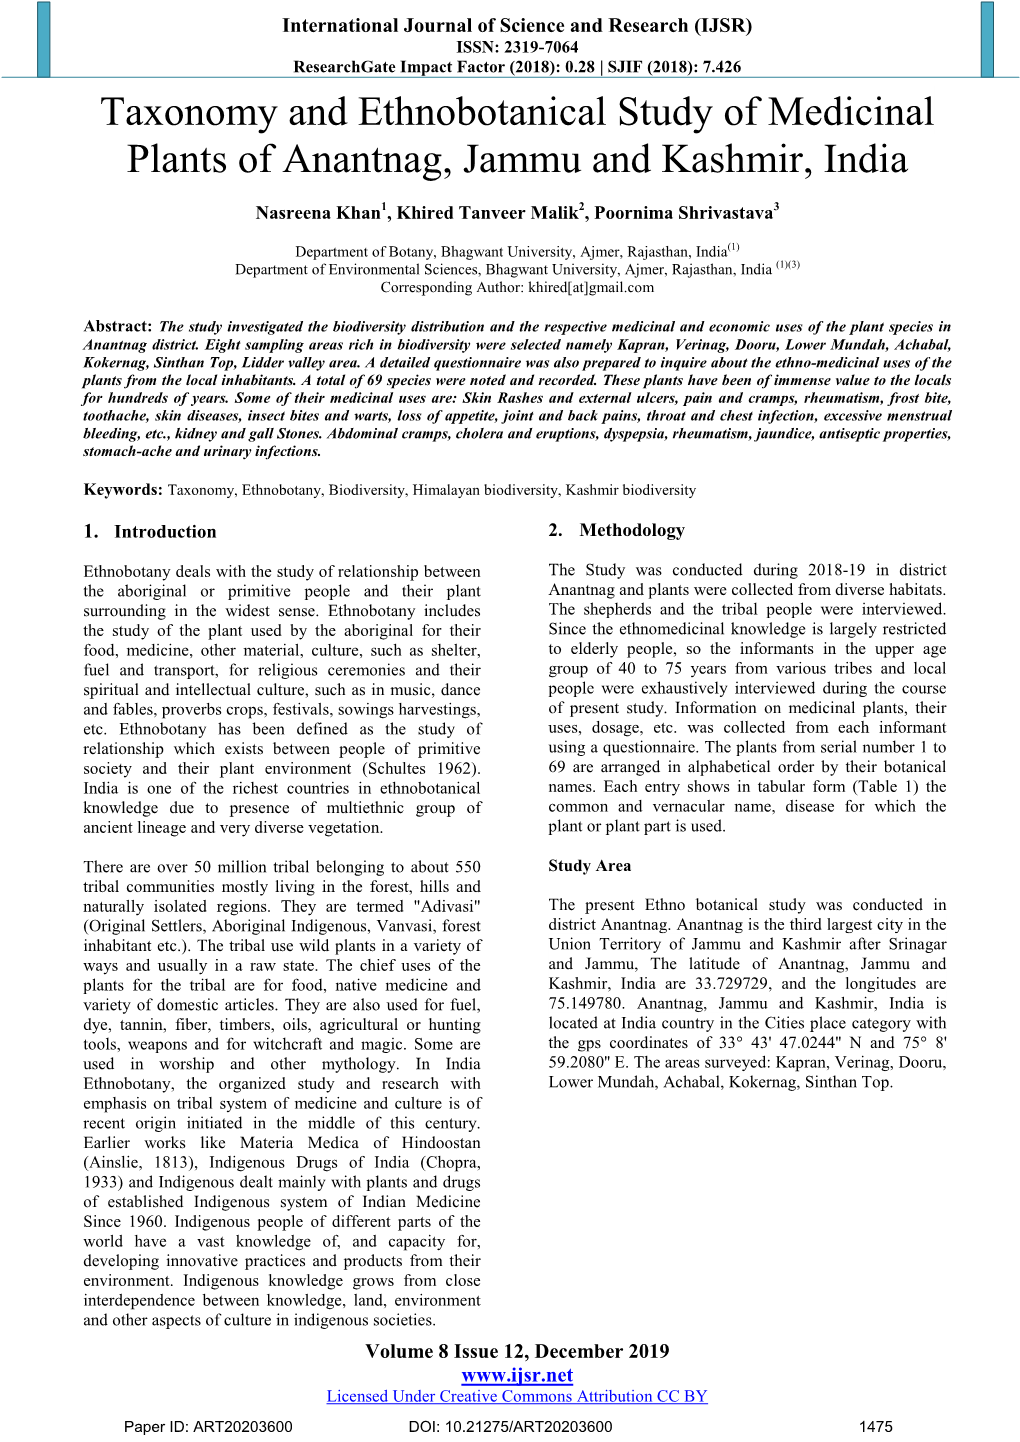 Taxonomy and Ethnobotanical Study of Medicinal Plants of Anantnag, Jammu and Kashmir, India